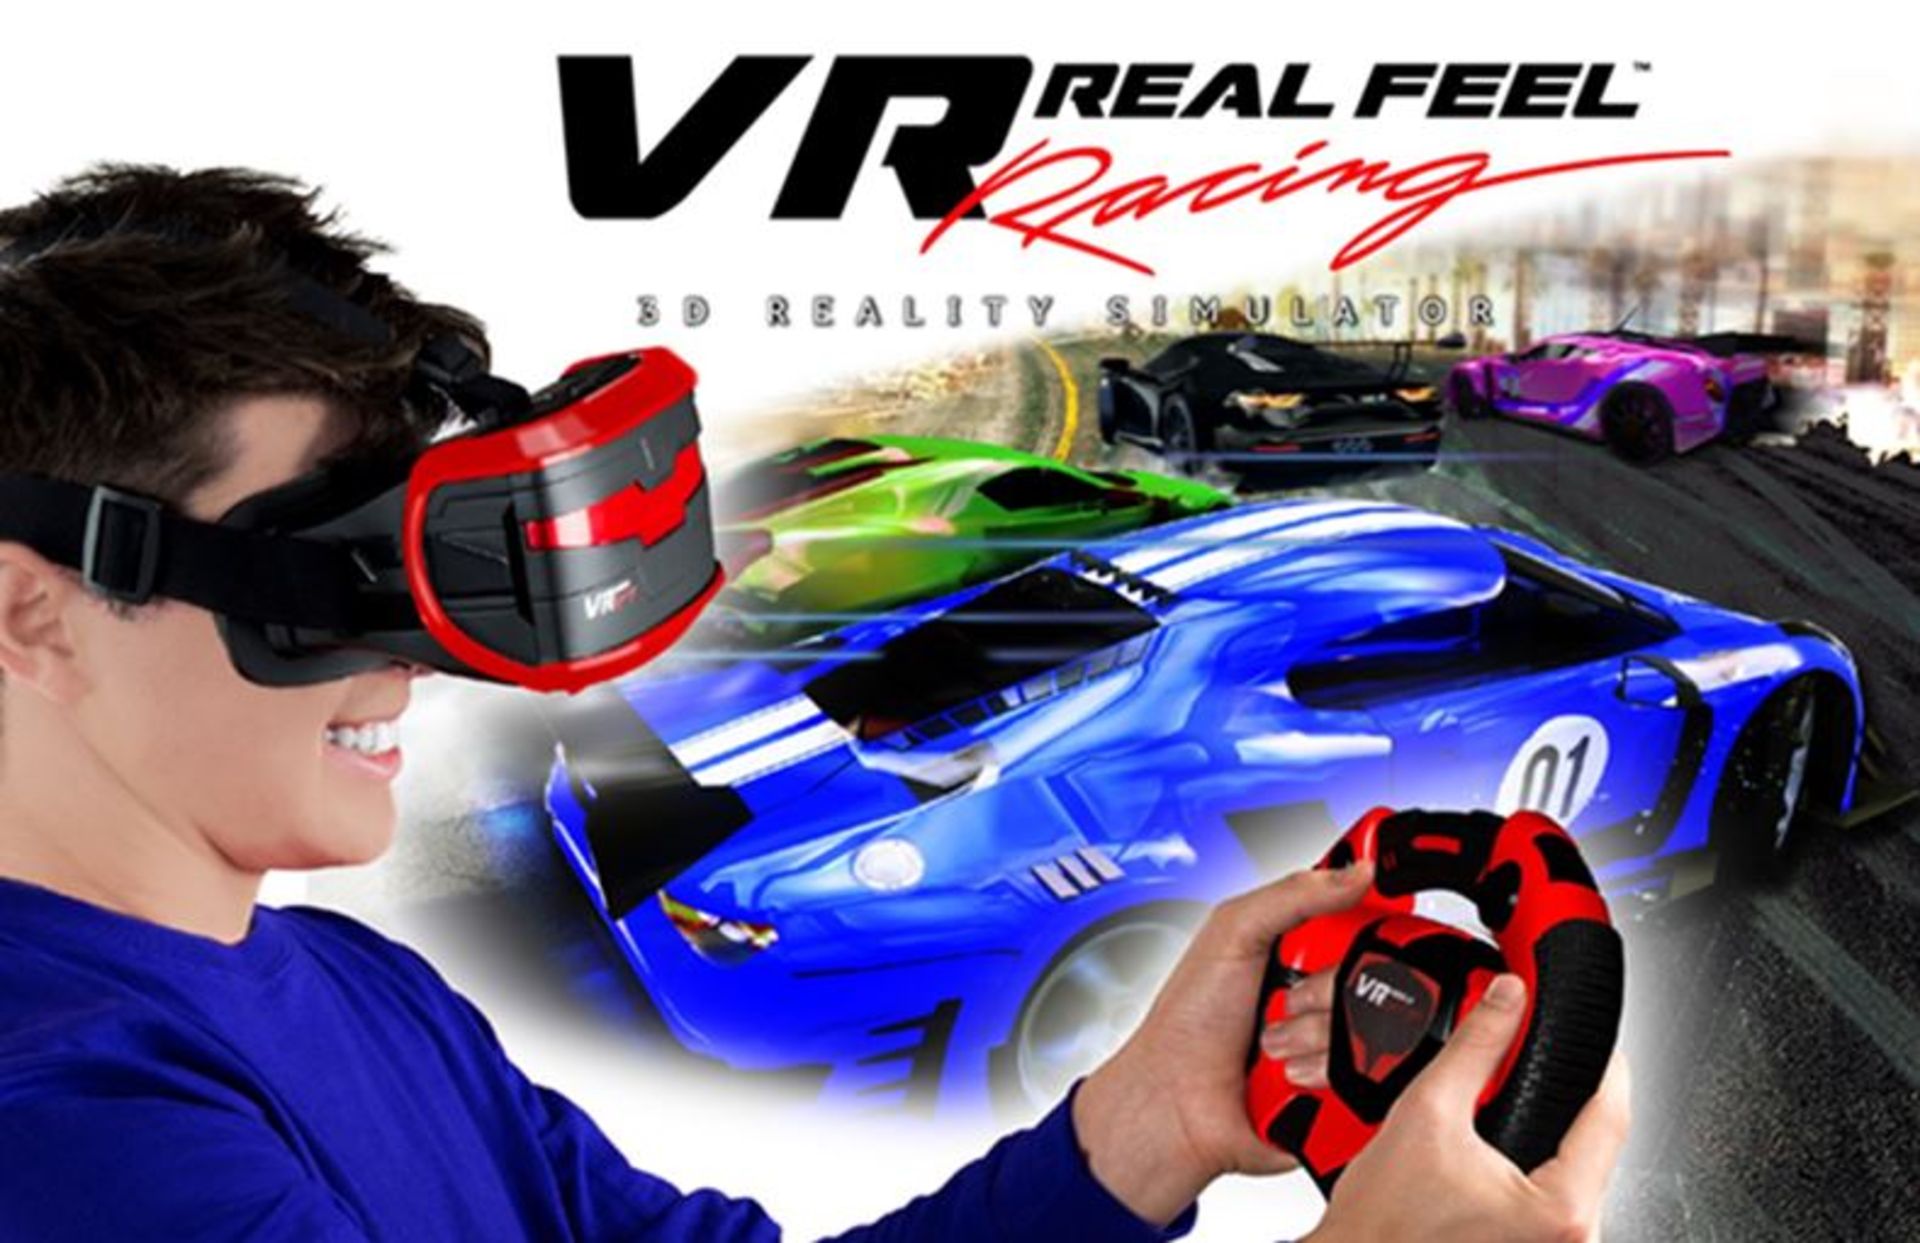 (R1I) 4x VR Real Feel Racing 3D Reality Simulator